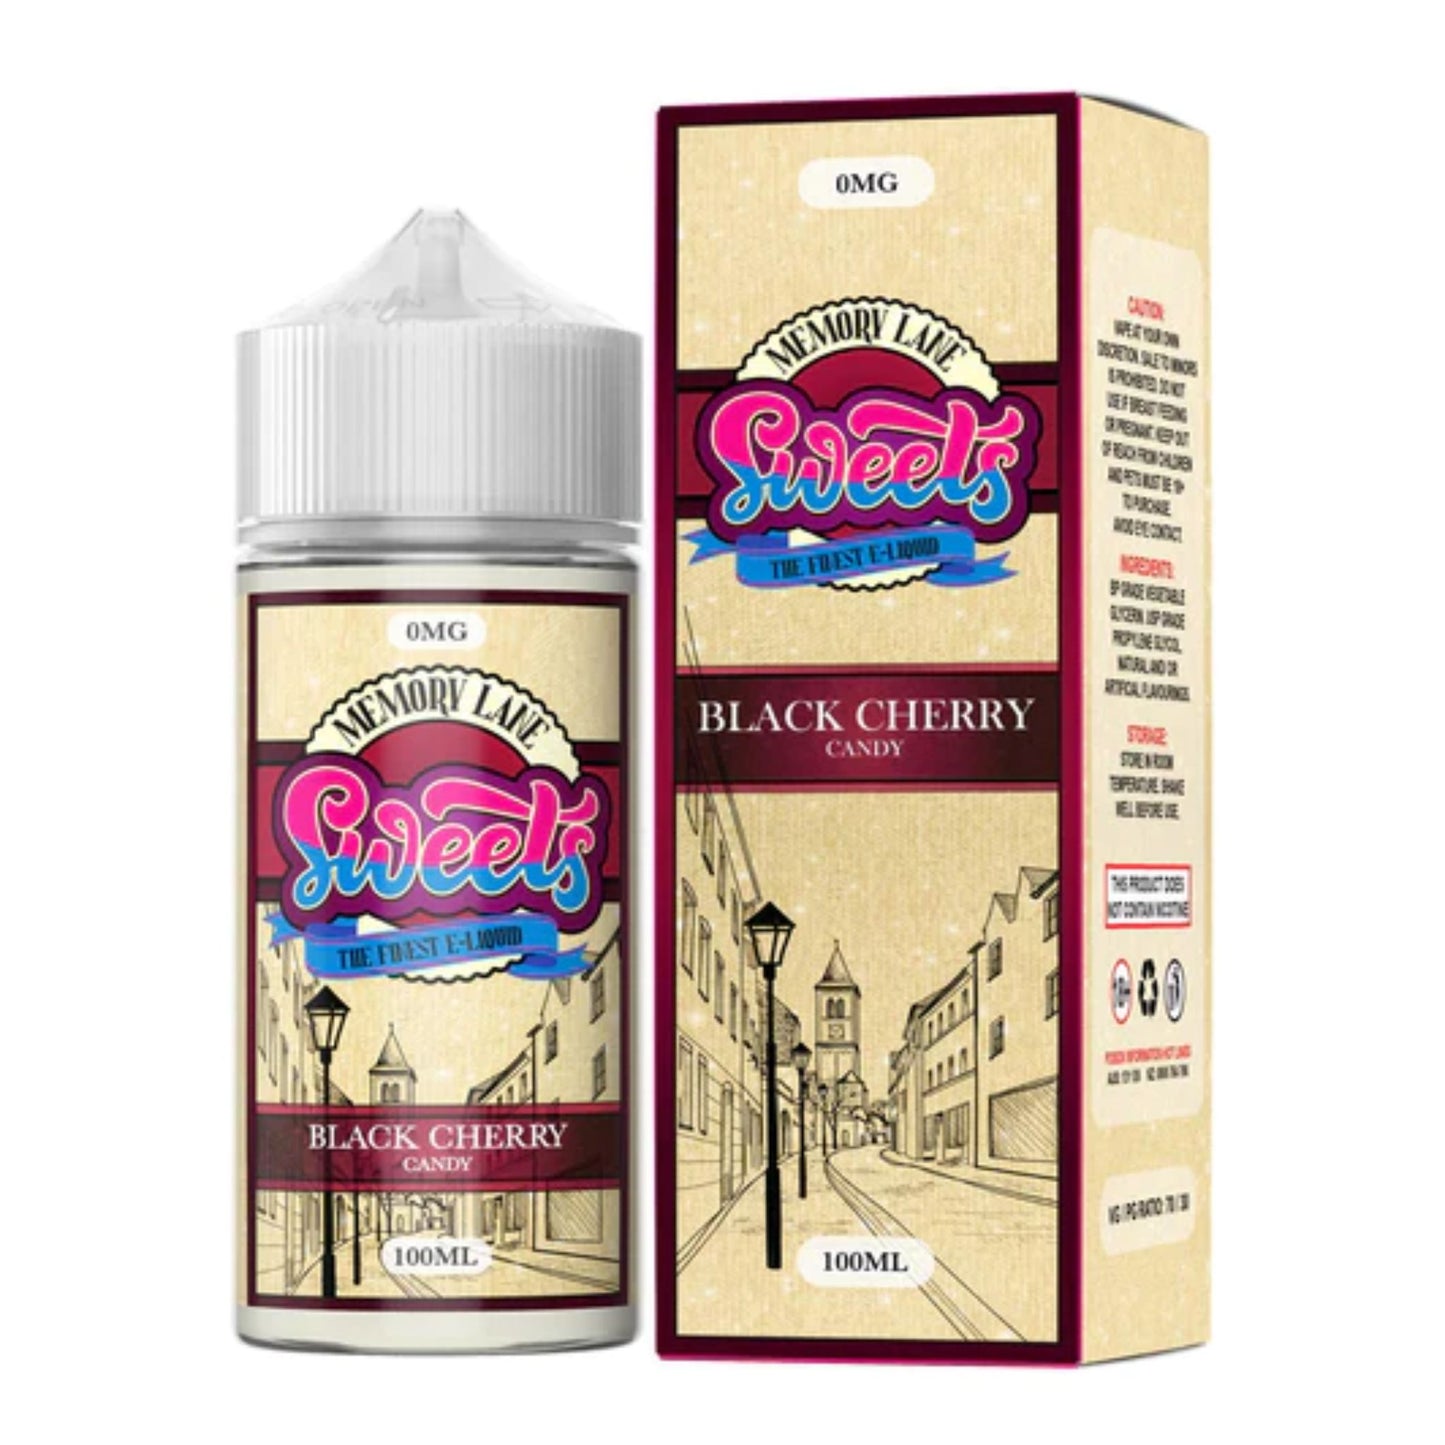 Memory Lane | Black Cherry Candy | 100ml bottle and box